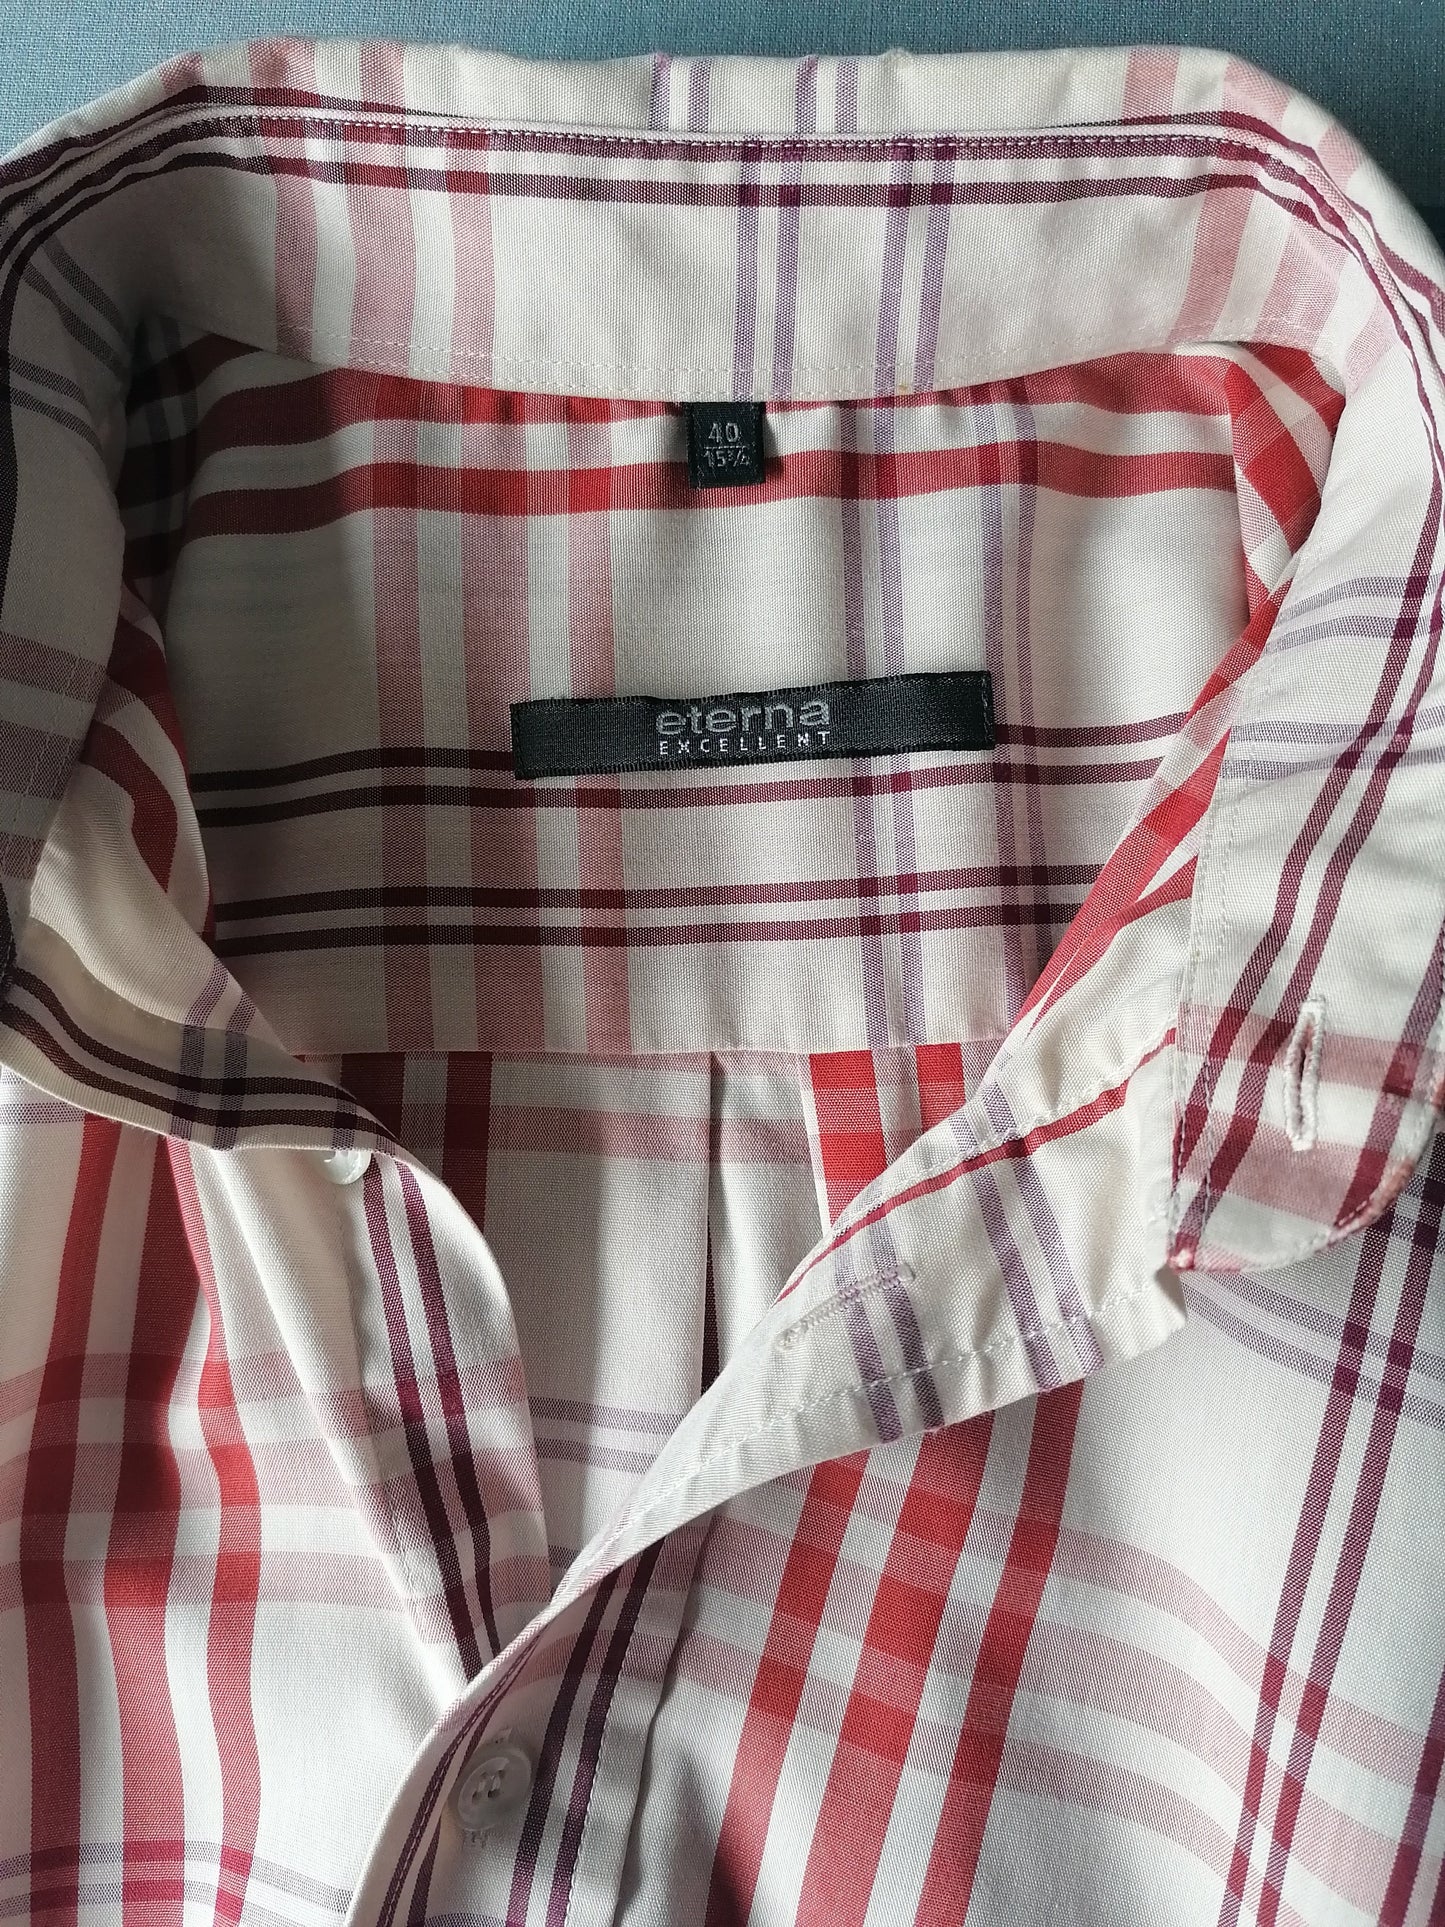 Eterna Excellent shirt short sleeves. Red beige. Size 40 / M / L